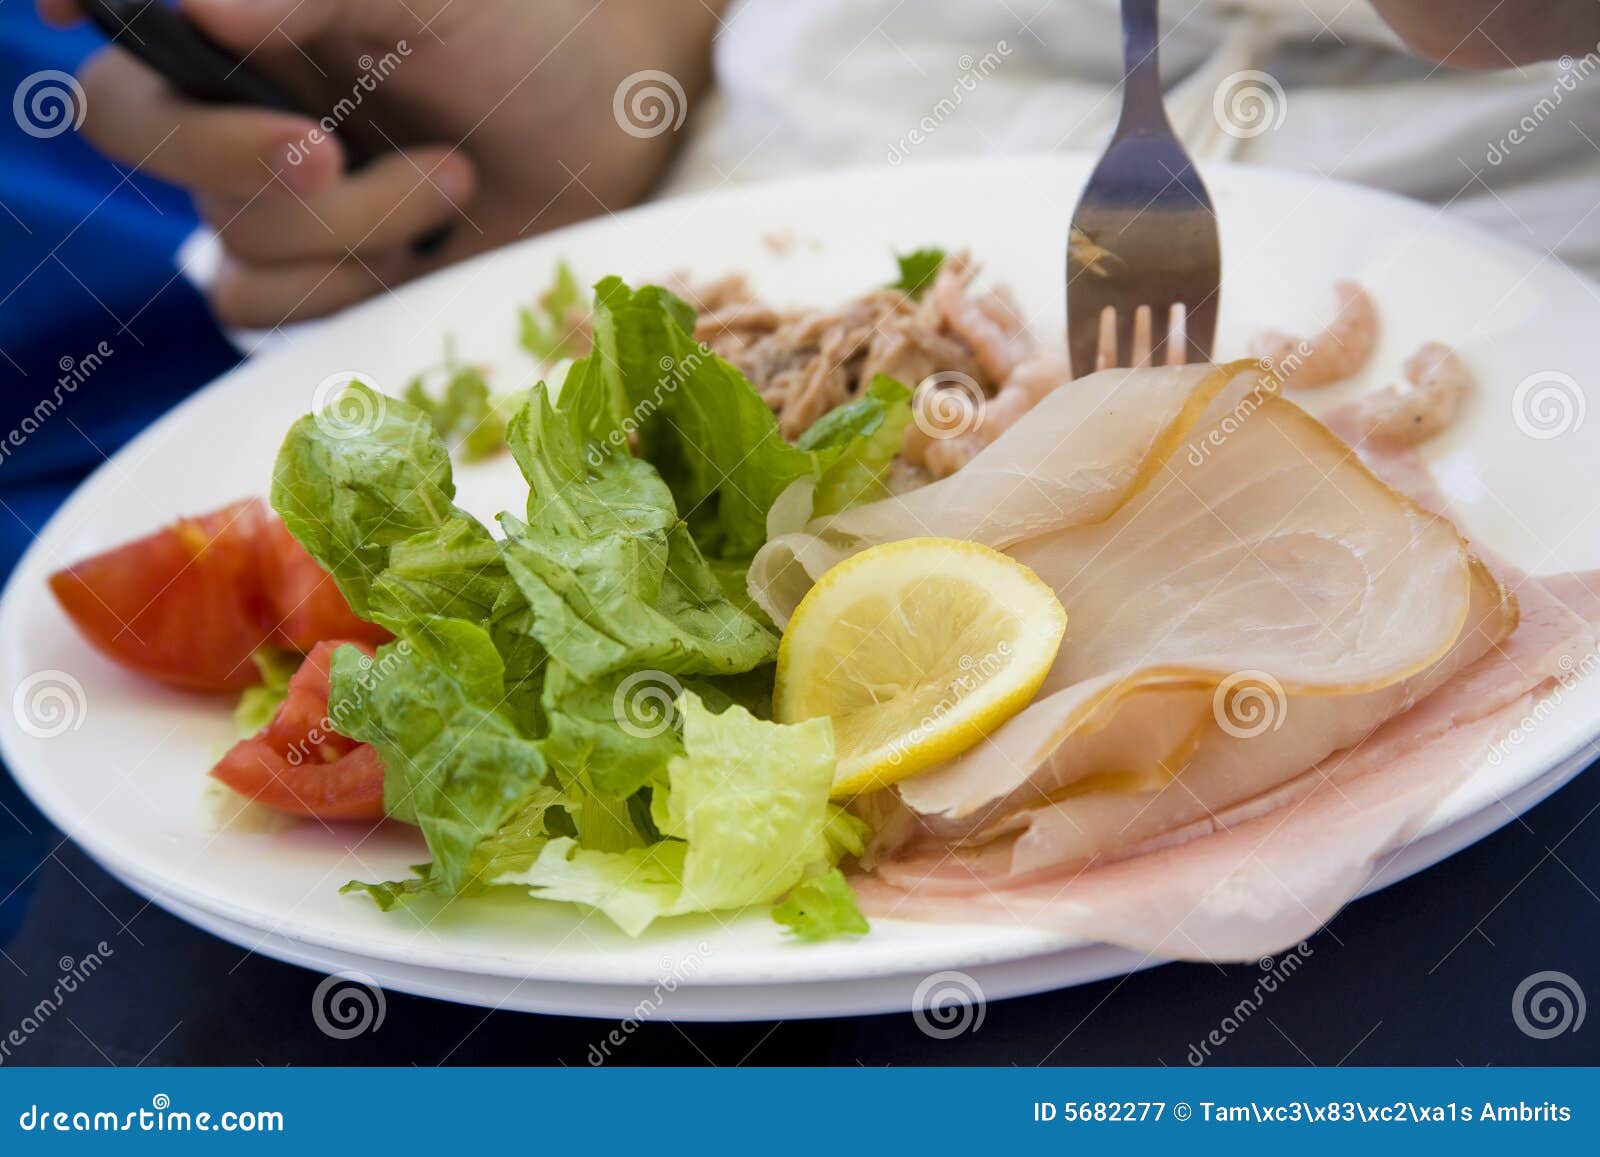 A plateful of food stock image. Image of salmon, salad - 5682277